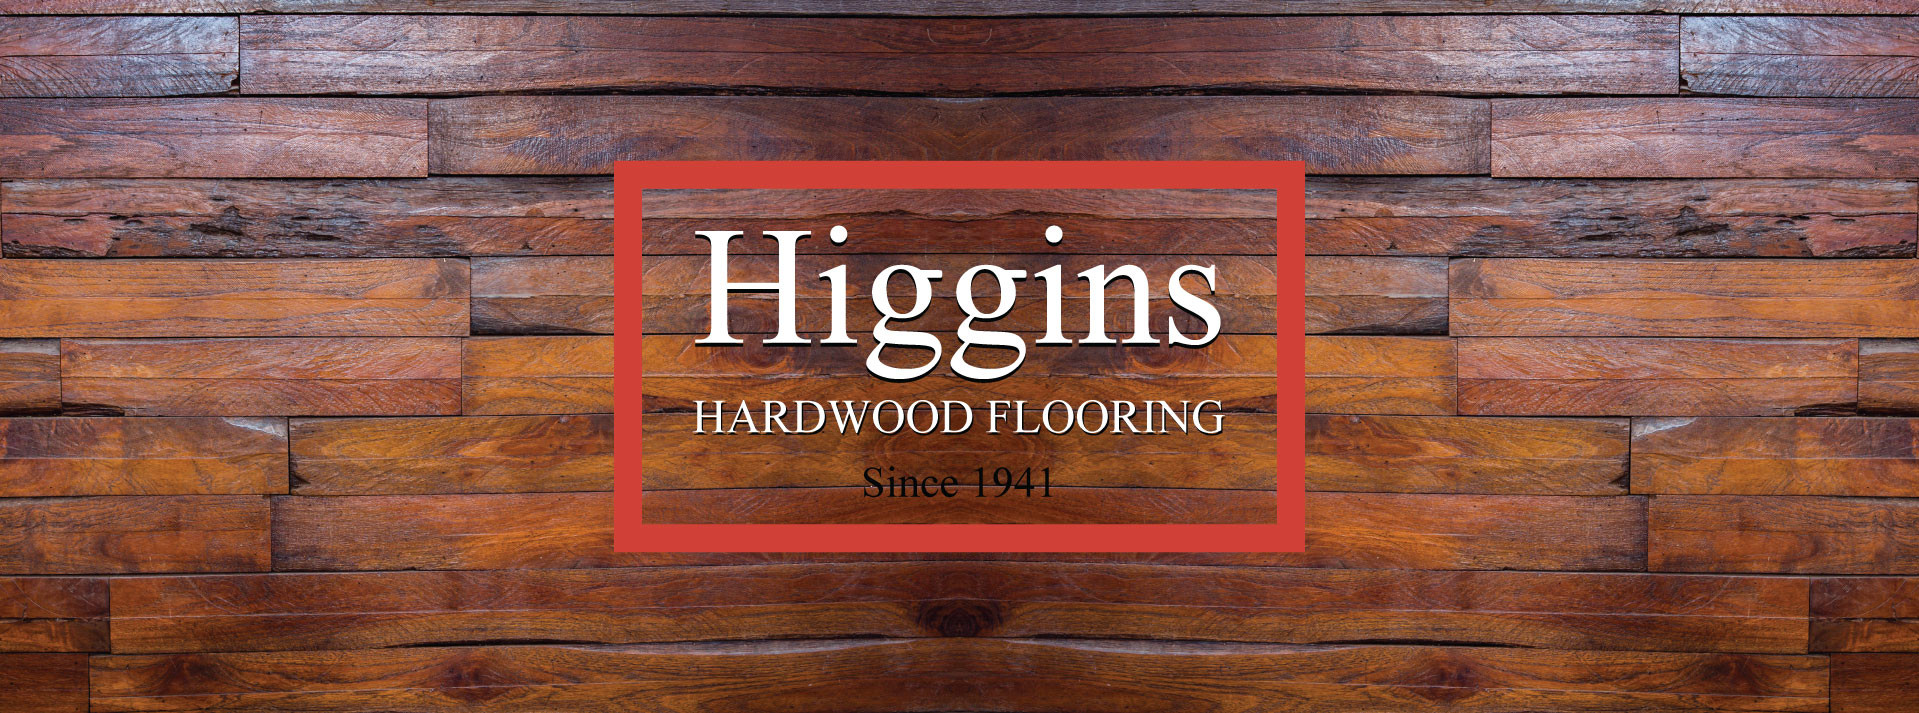 hardwood floor refinishing waterville me of higgins hardwood flooring in peterborough oshawa lindsay ajax inside office hours